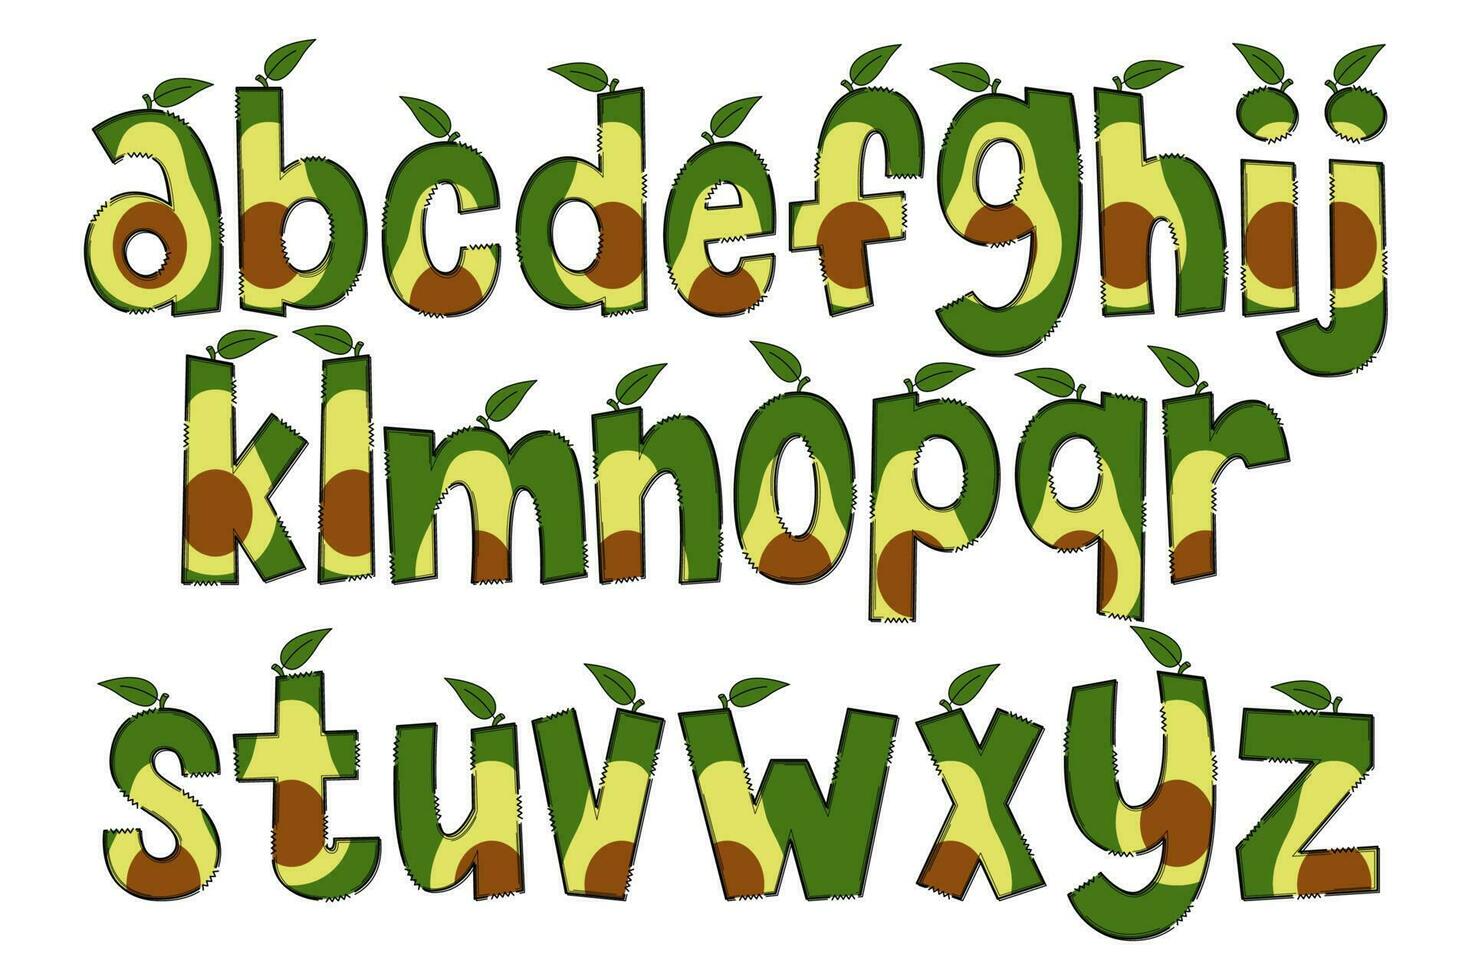 handgjord avokado brev. Färg kreativ konst typografisk design vektor